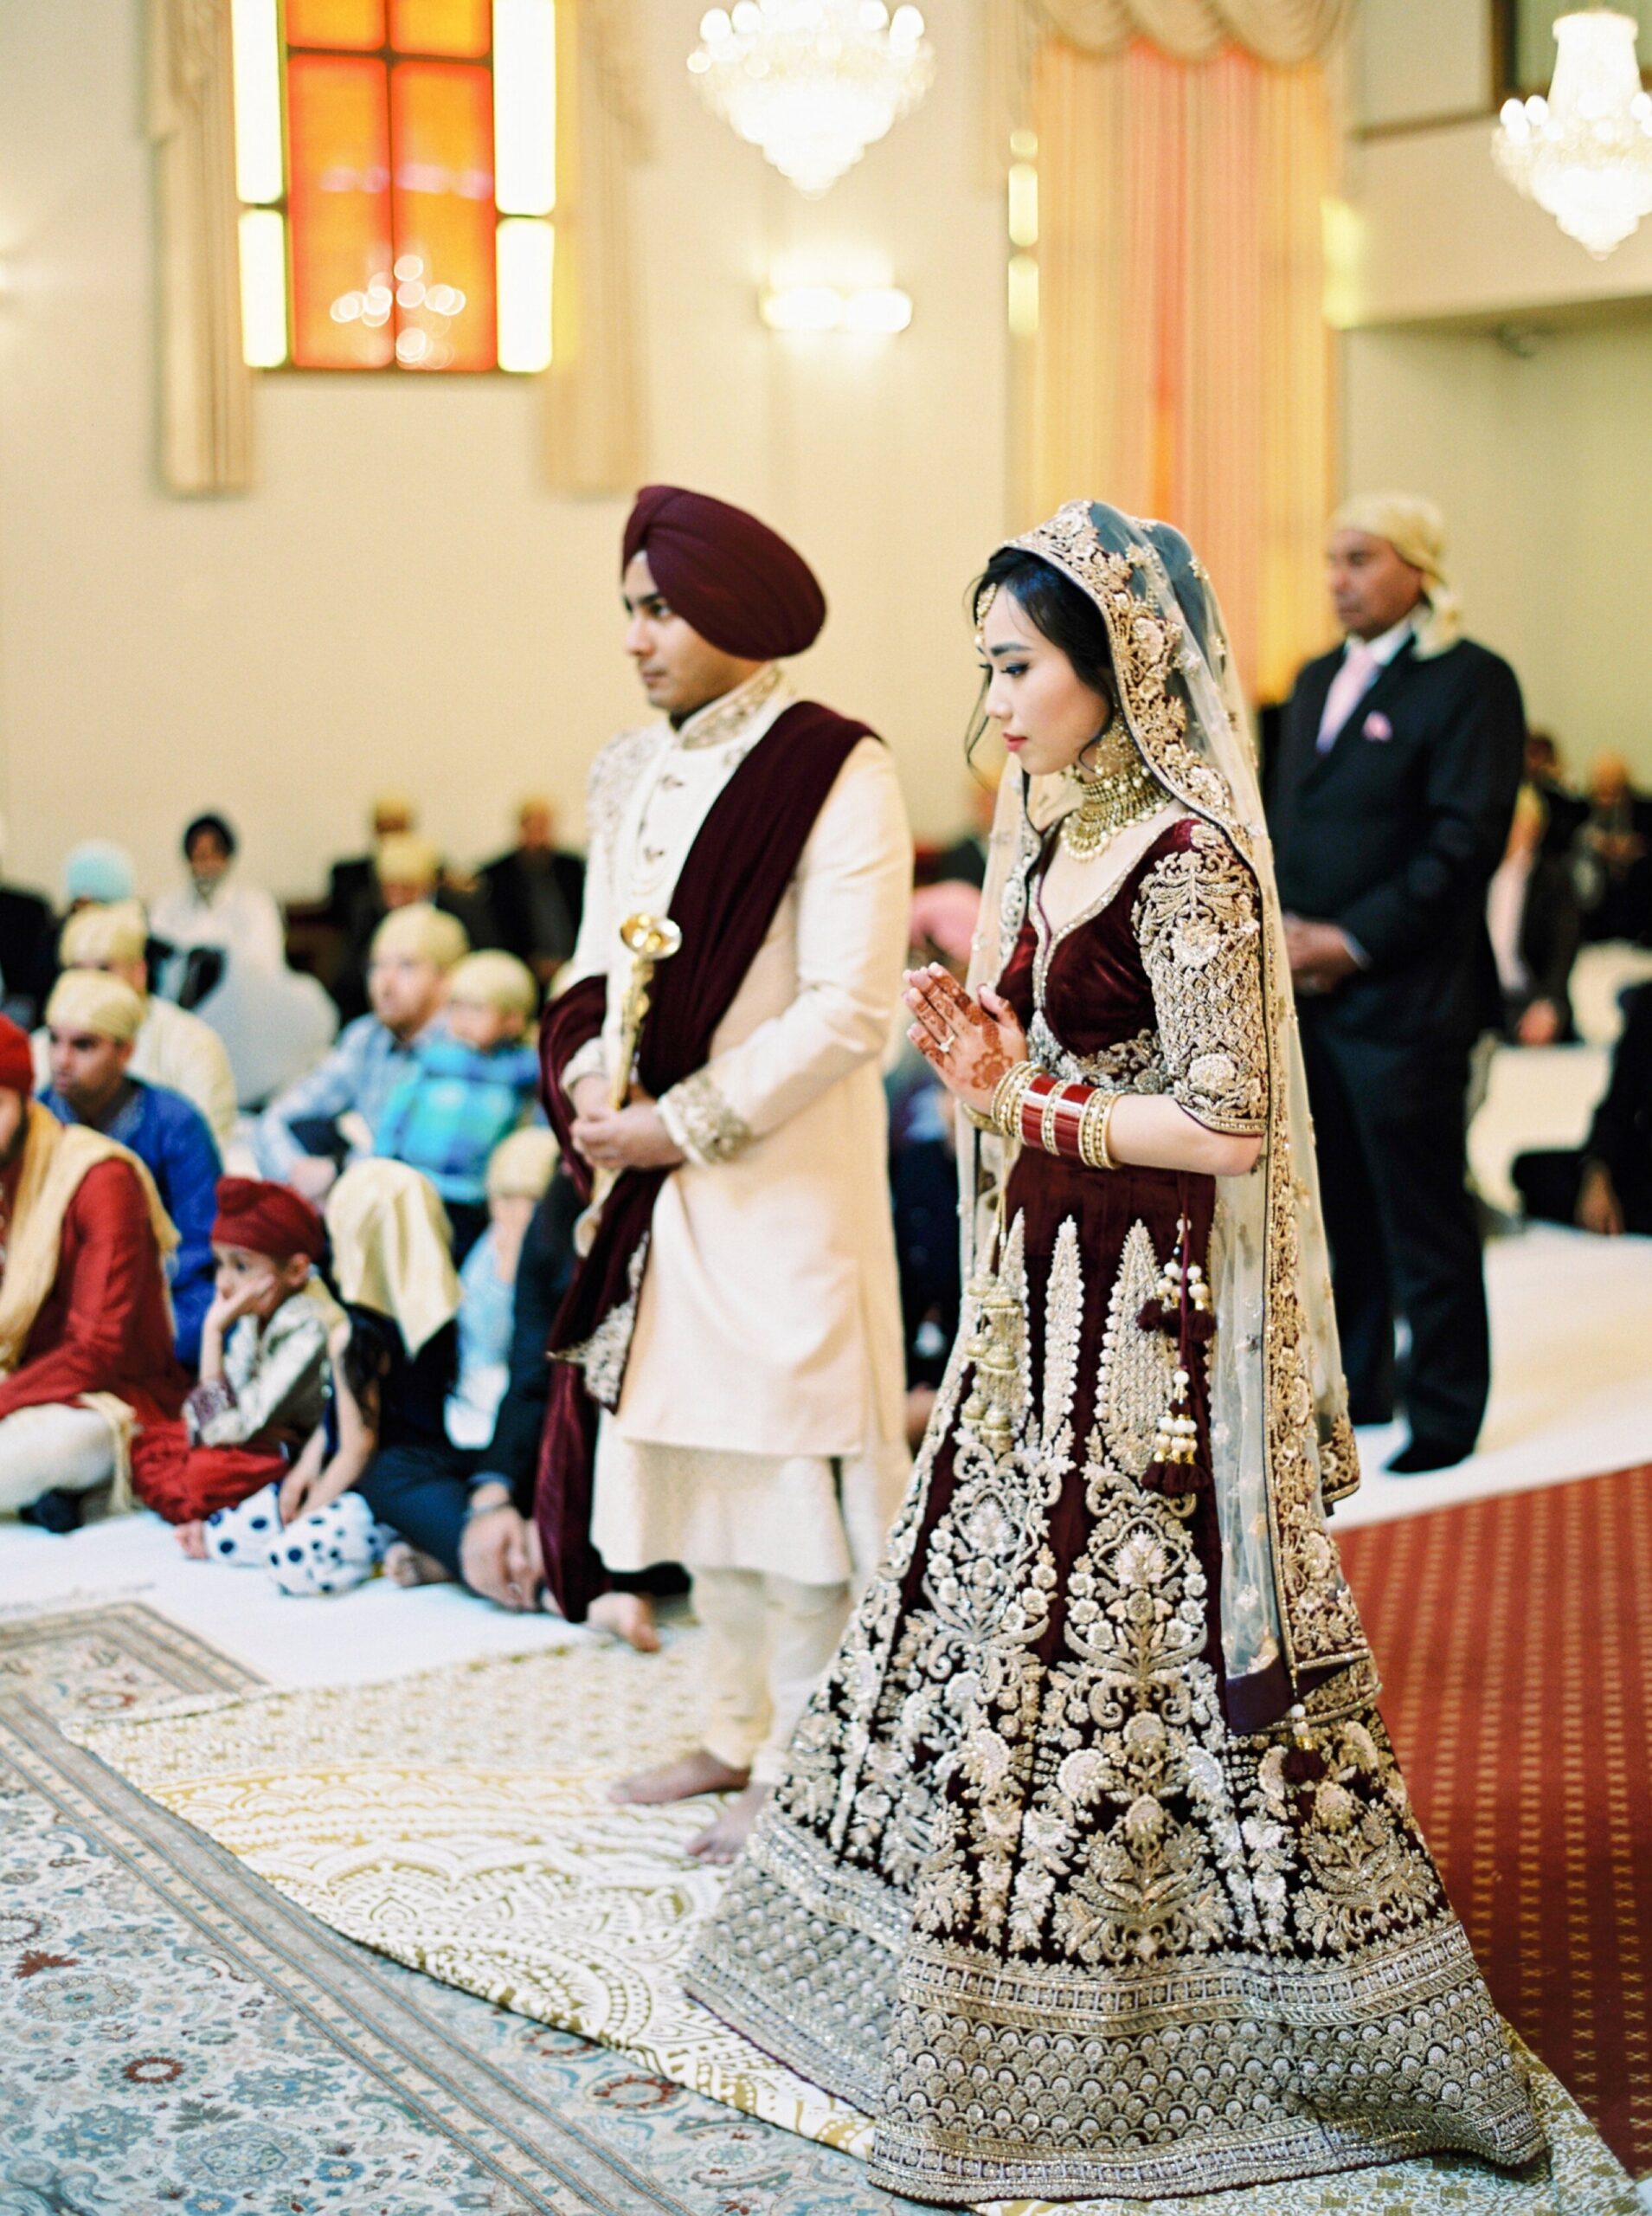  Calgary Sikh wedding in the temple | Indian Chinese Fusion Wedding | Calgary wedding photographers 